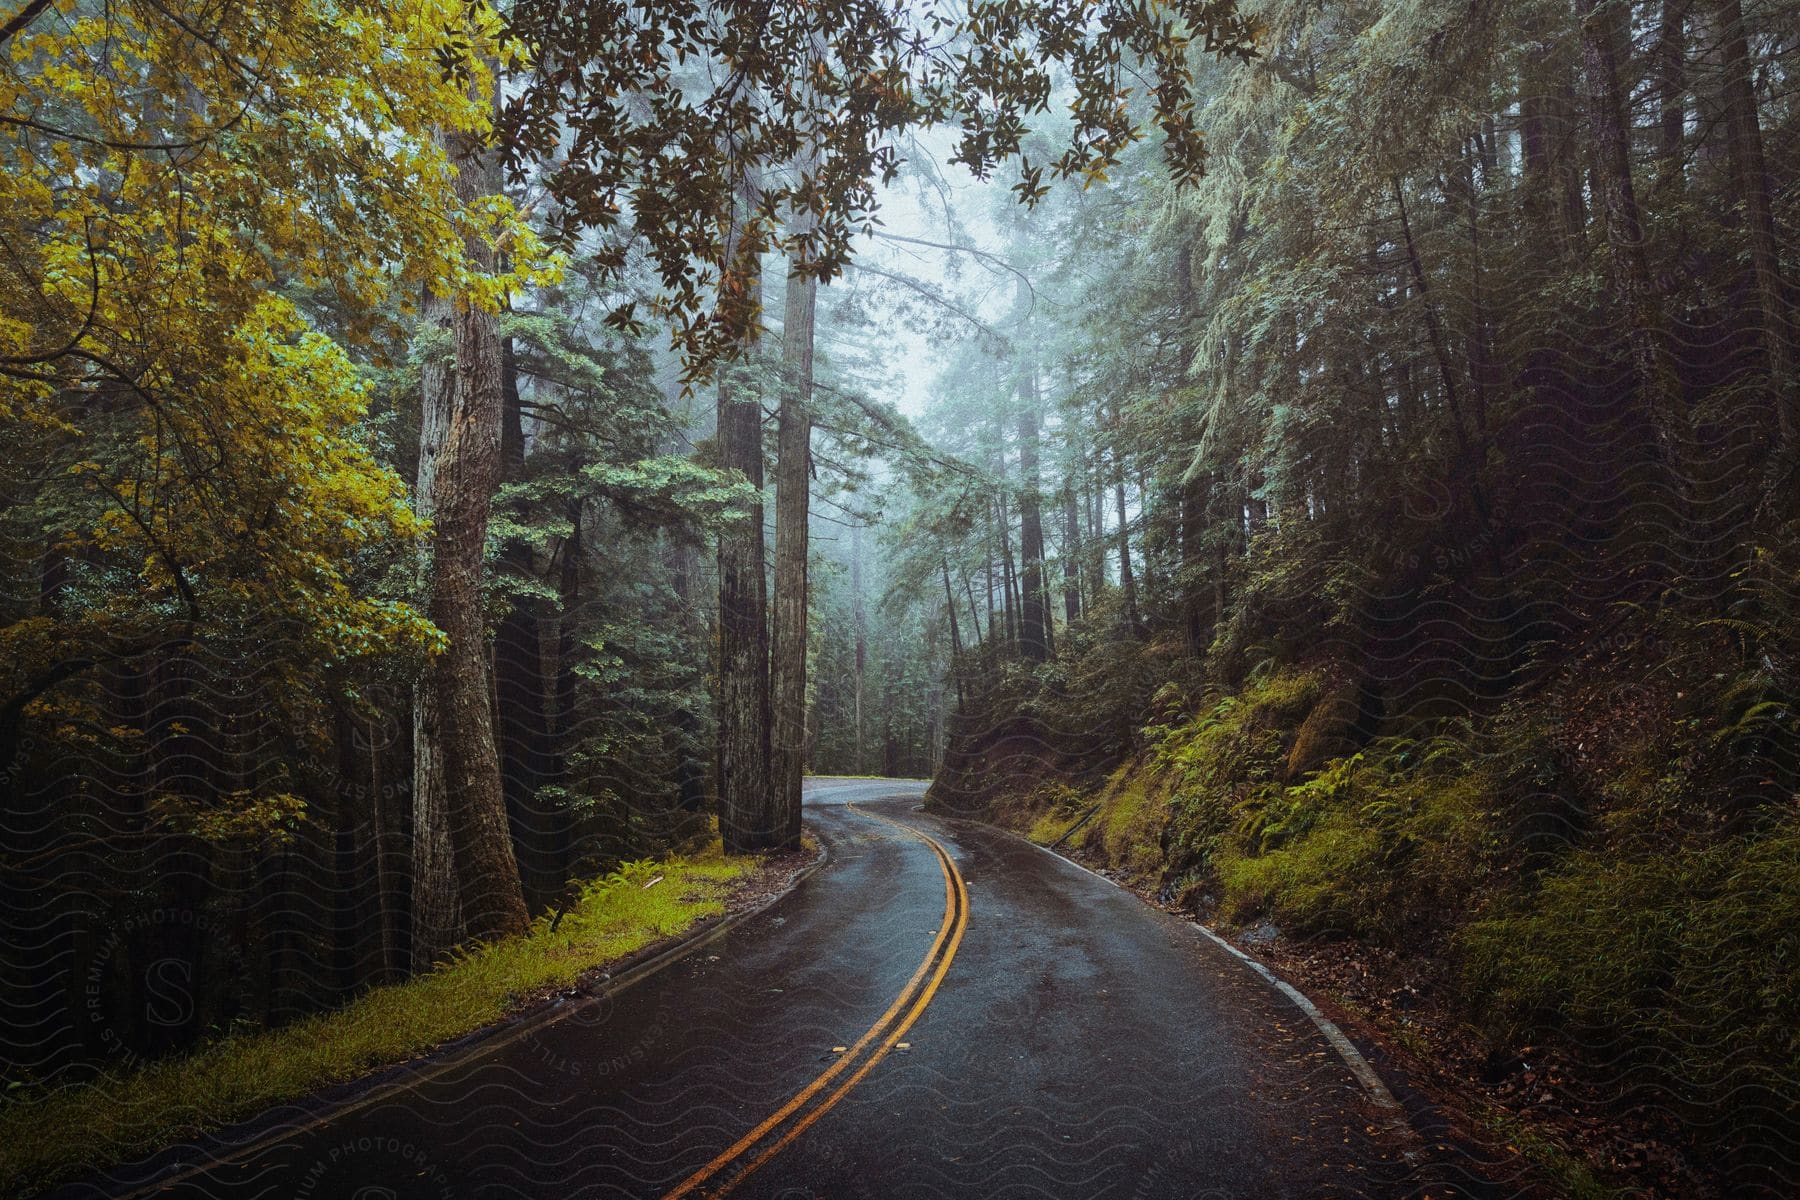 Winding asphalt road running through a foggy forest.